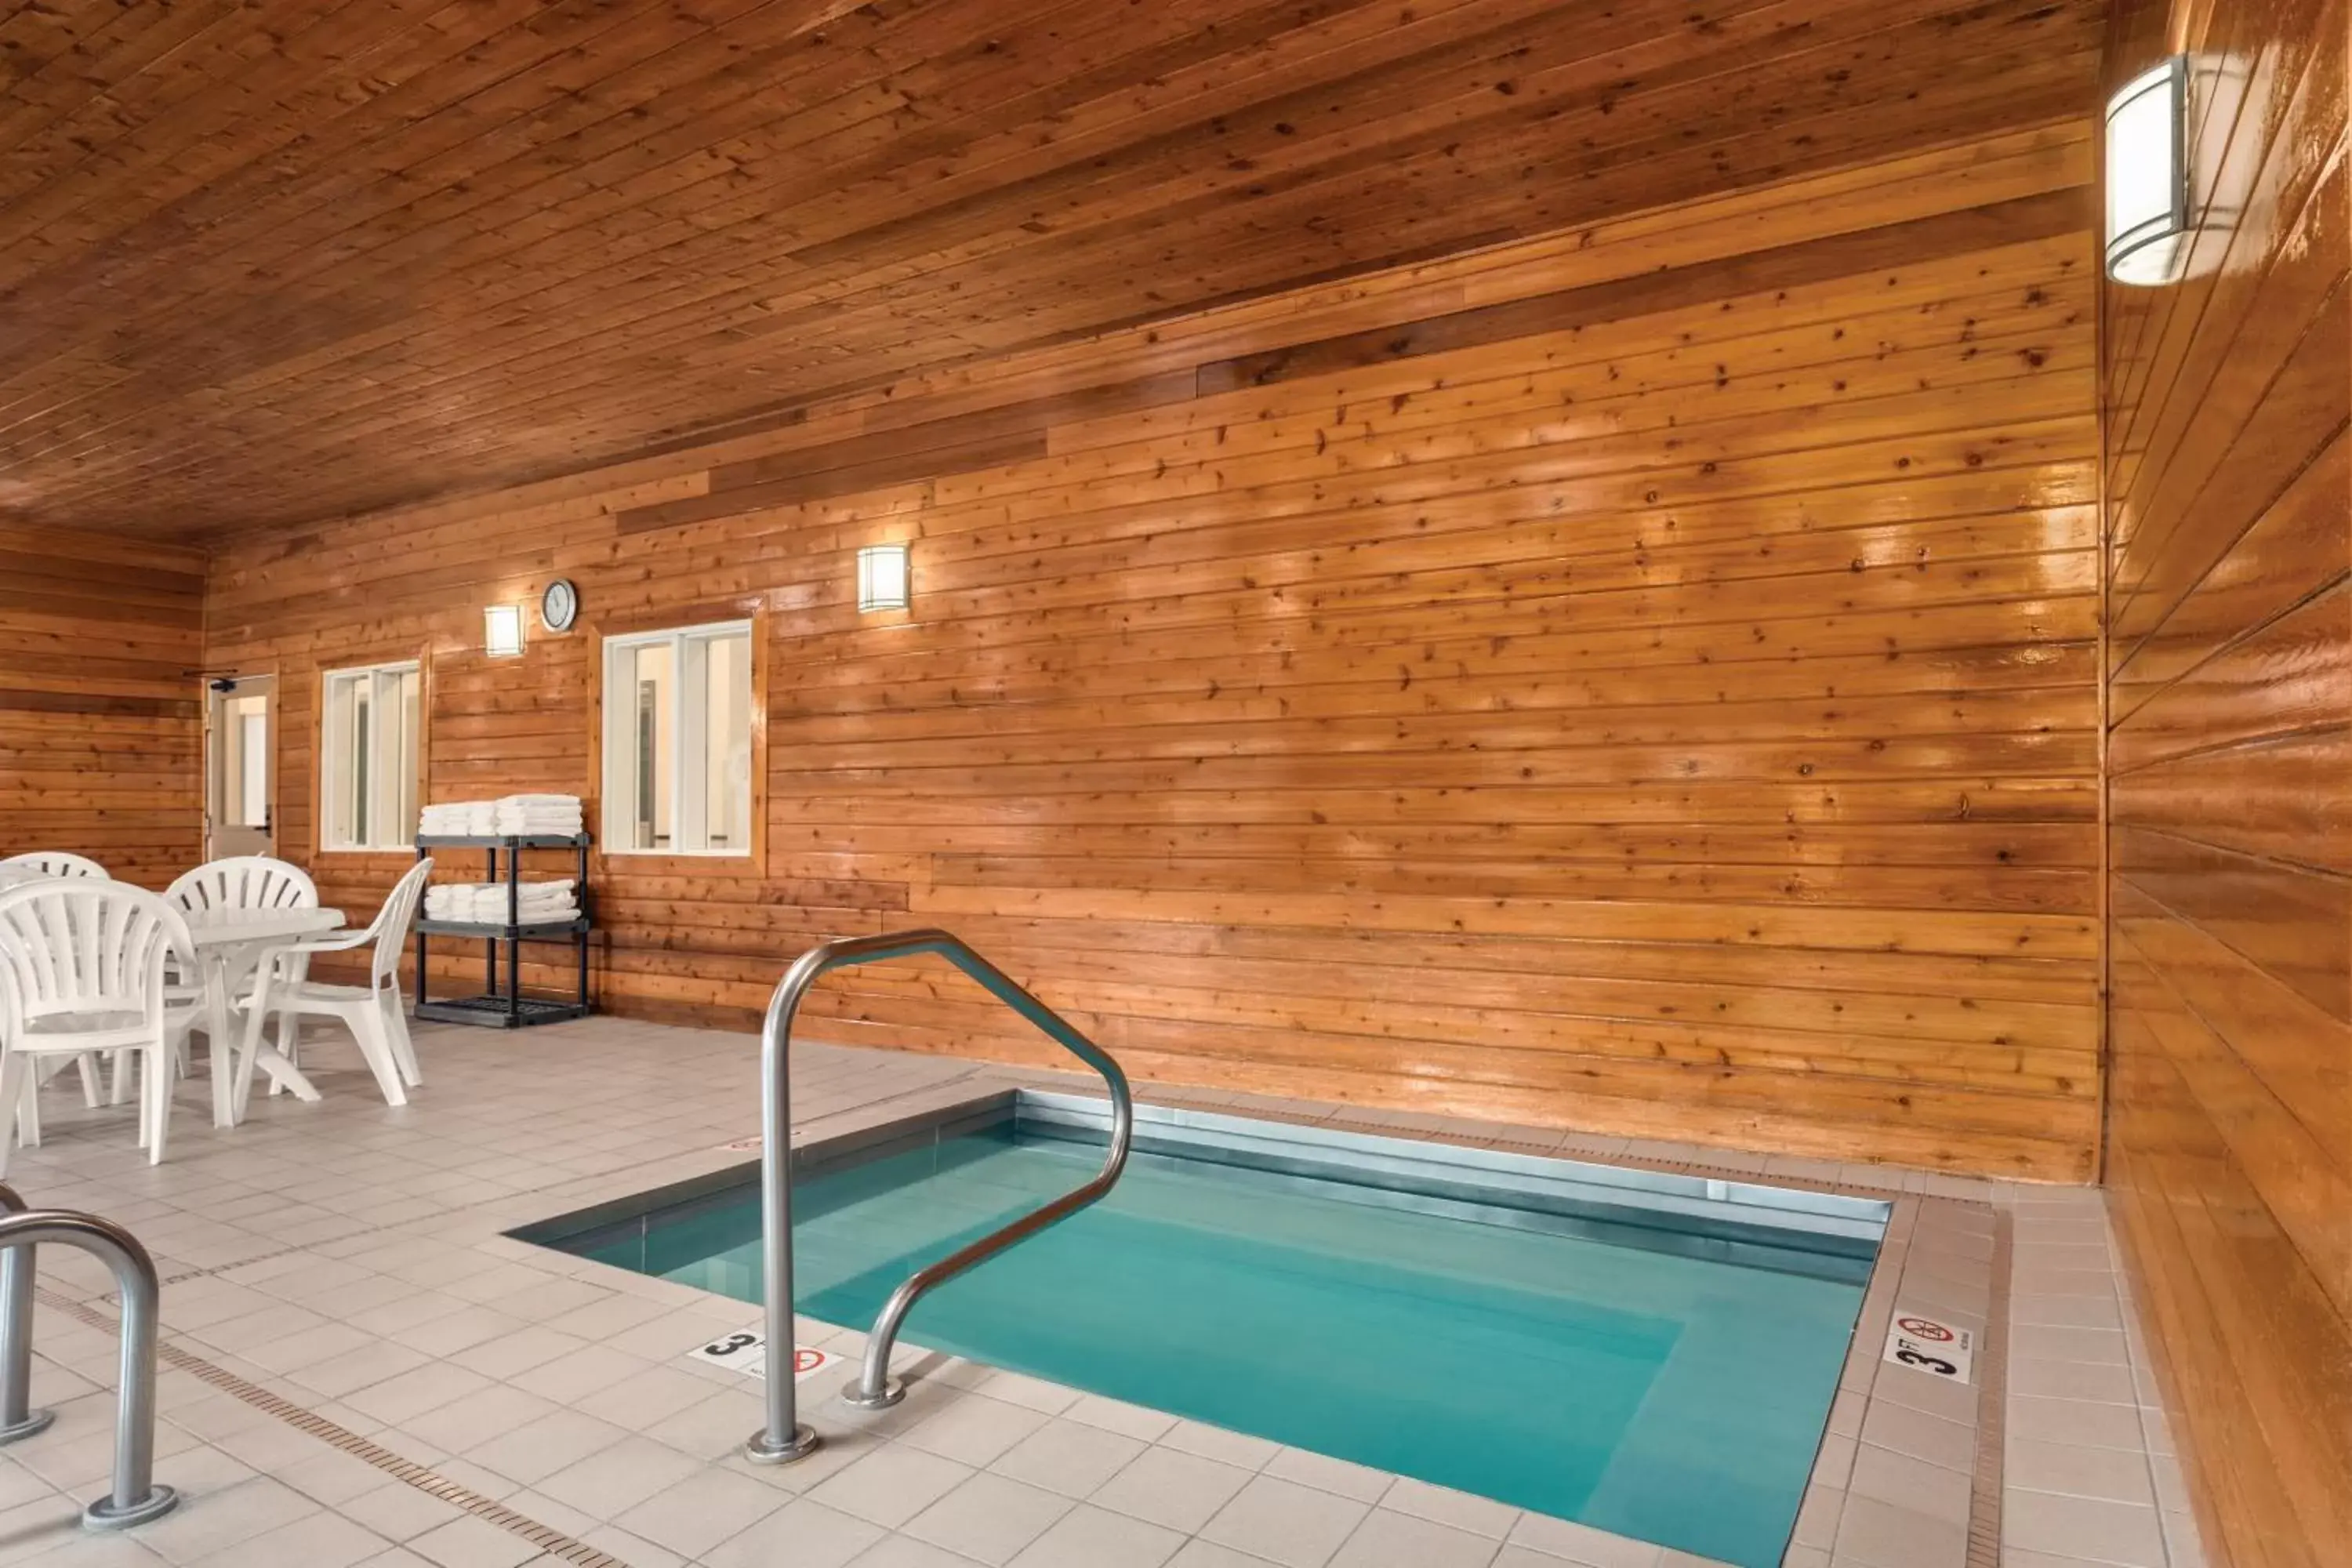 Hot Tub, Swimming Pool in Country Inn & Suites by Radisson, Dakota Dunes, SD